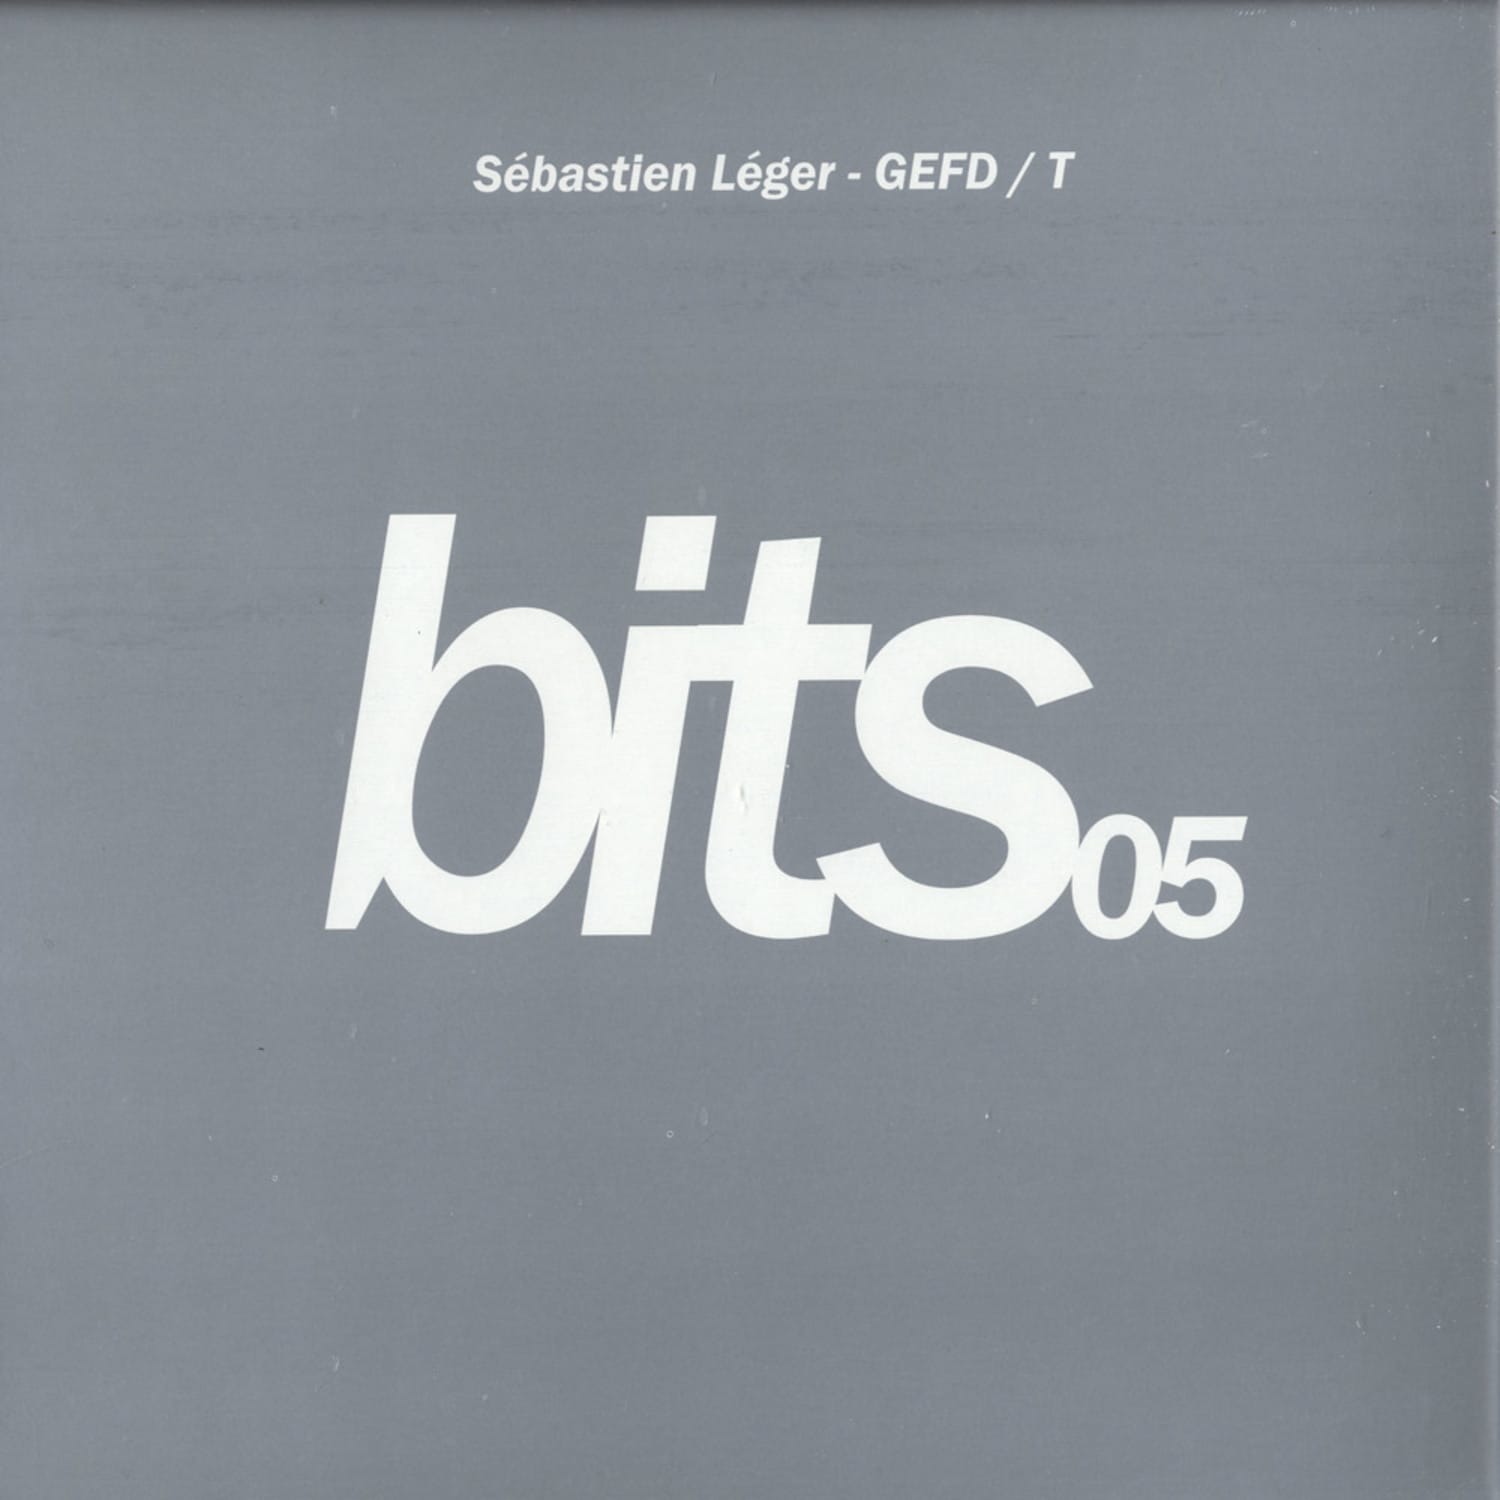 Sebastian Leger - GEFD / T